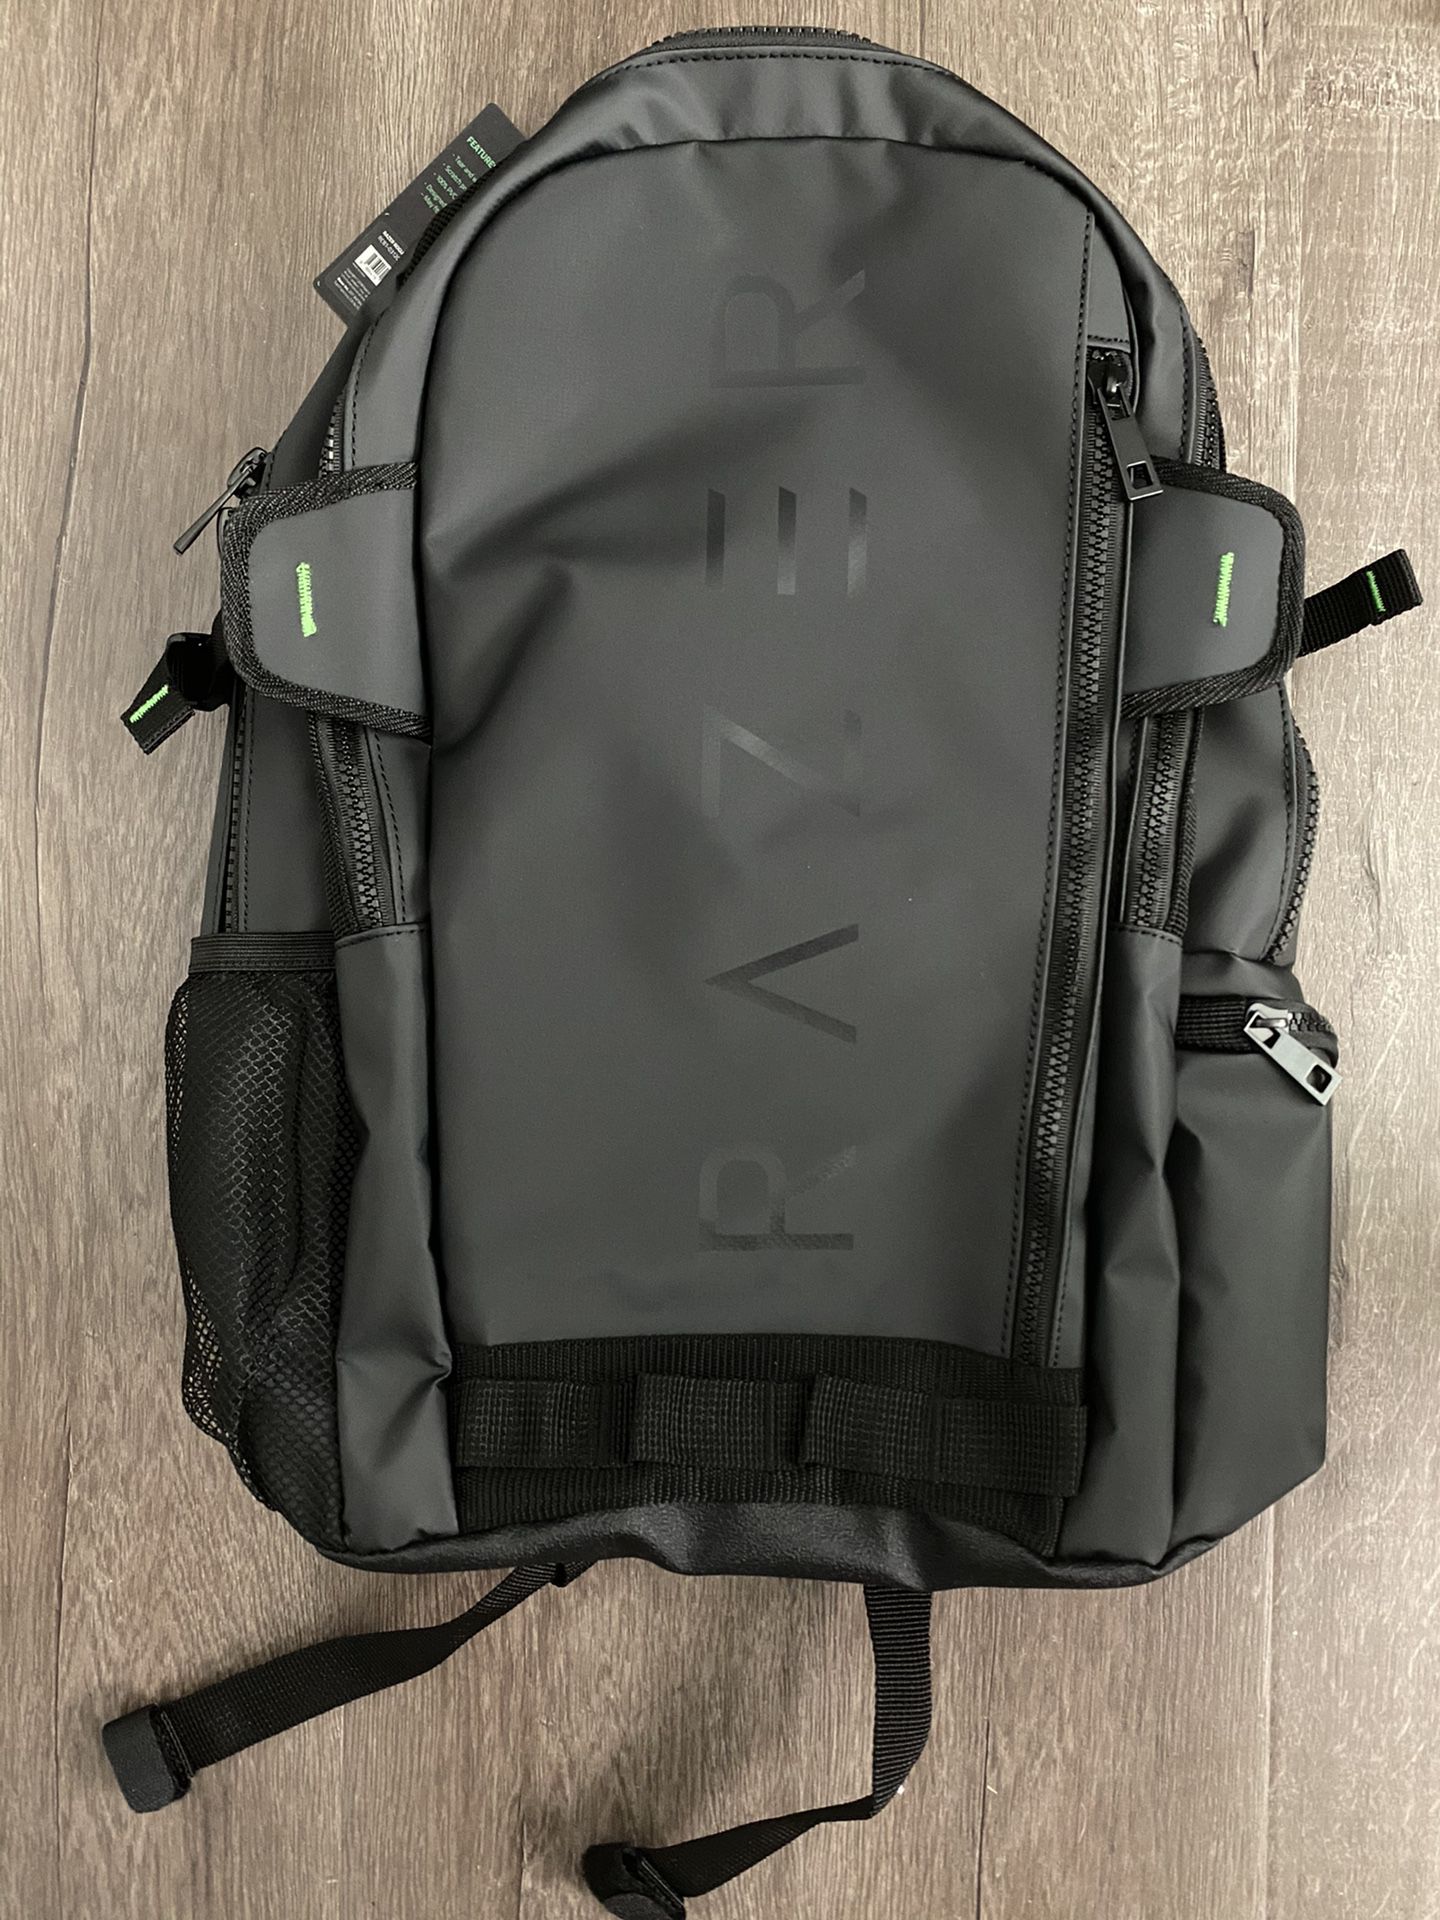 Razer Laptop Backpack (up to 15.6” laptops) - Black NEW